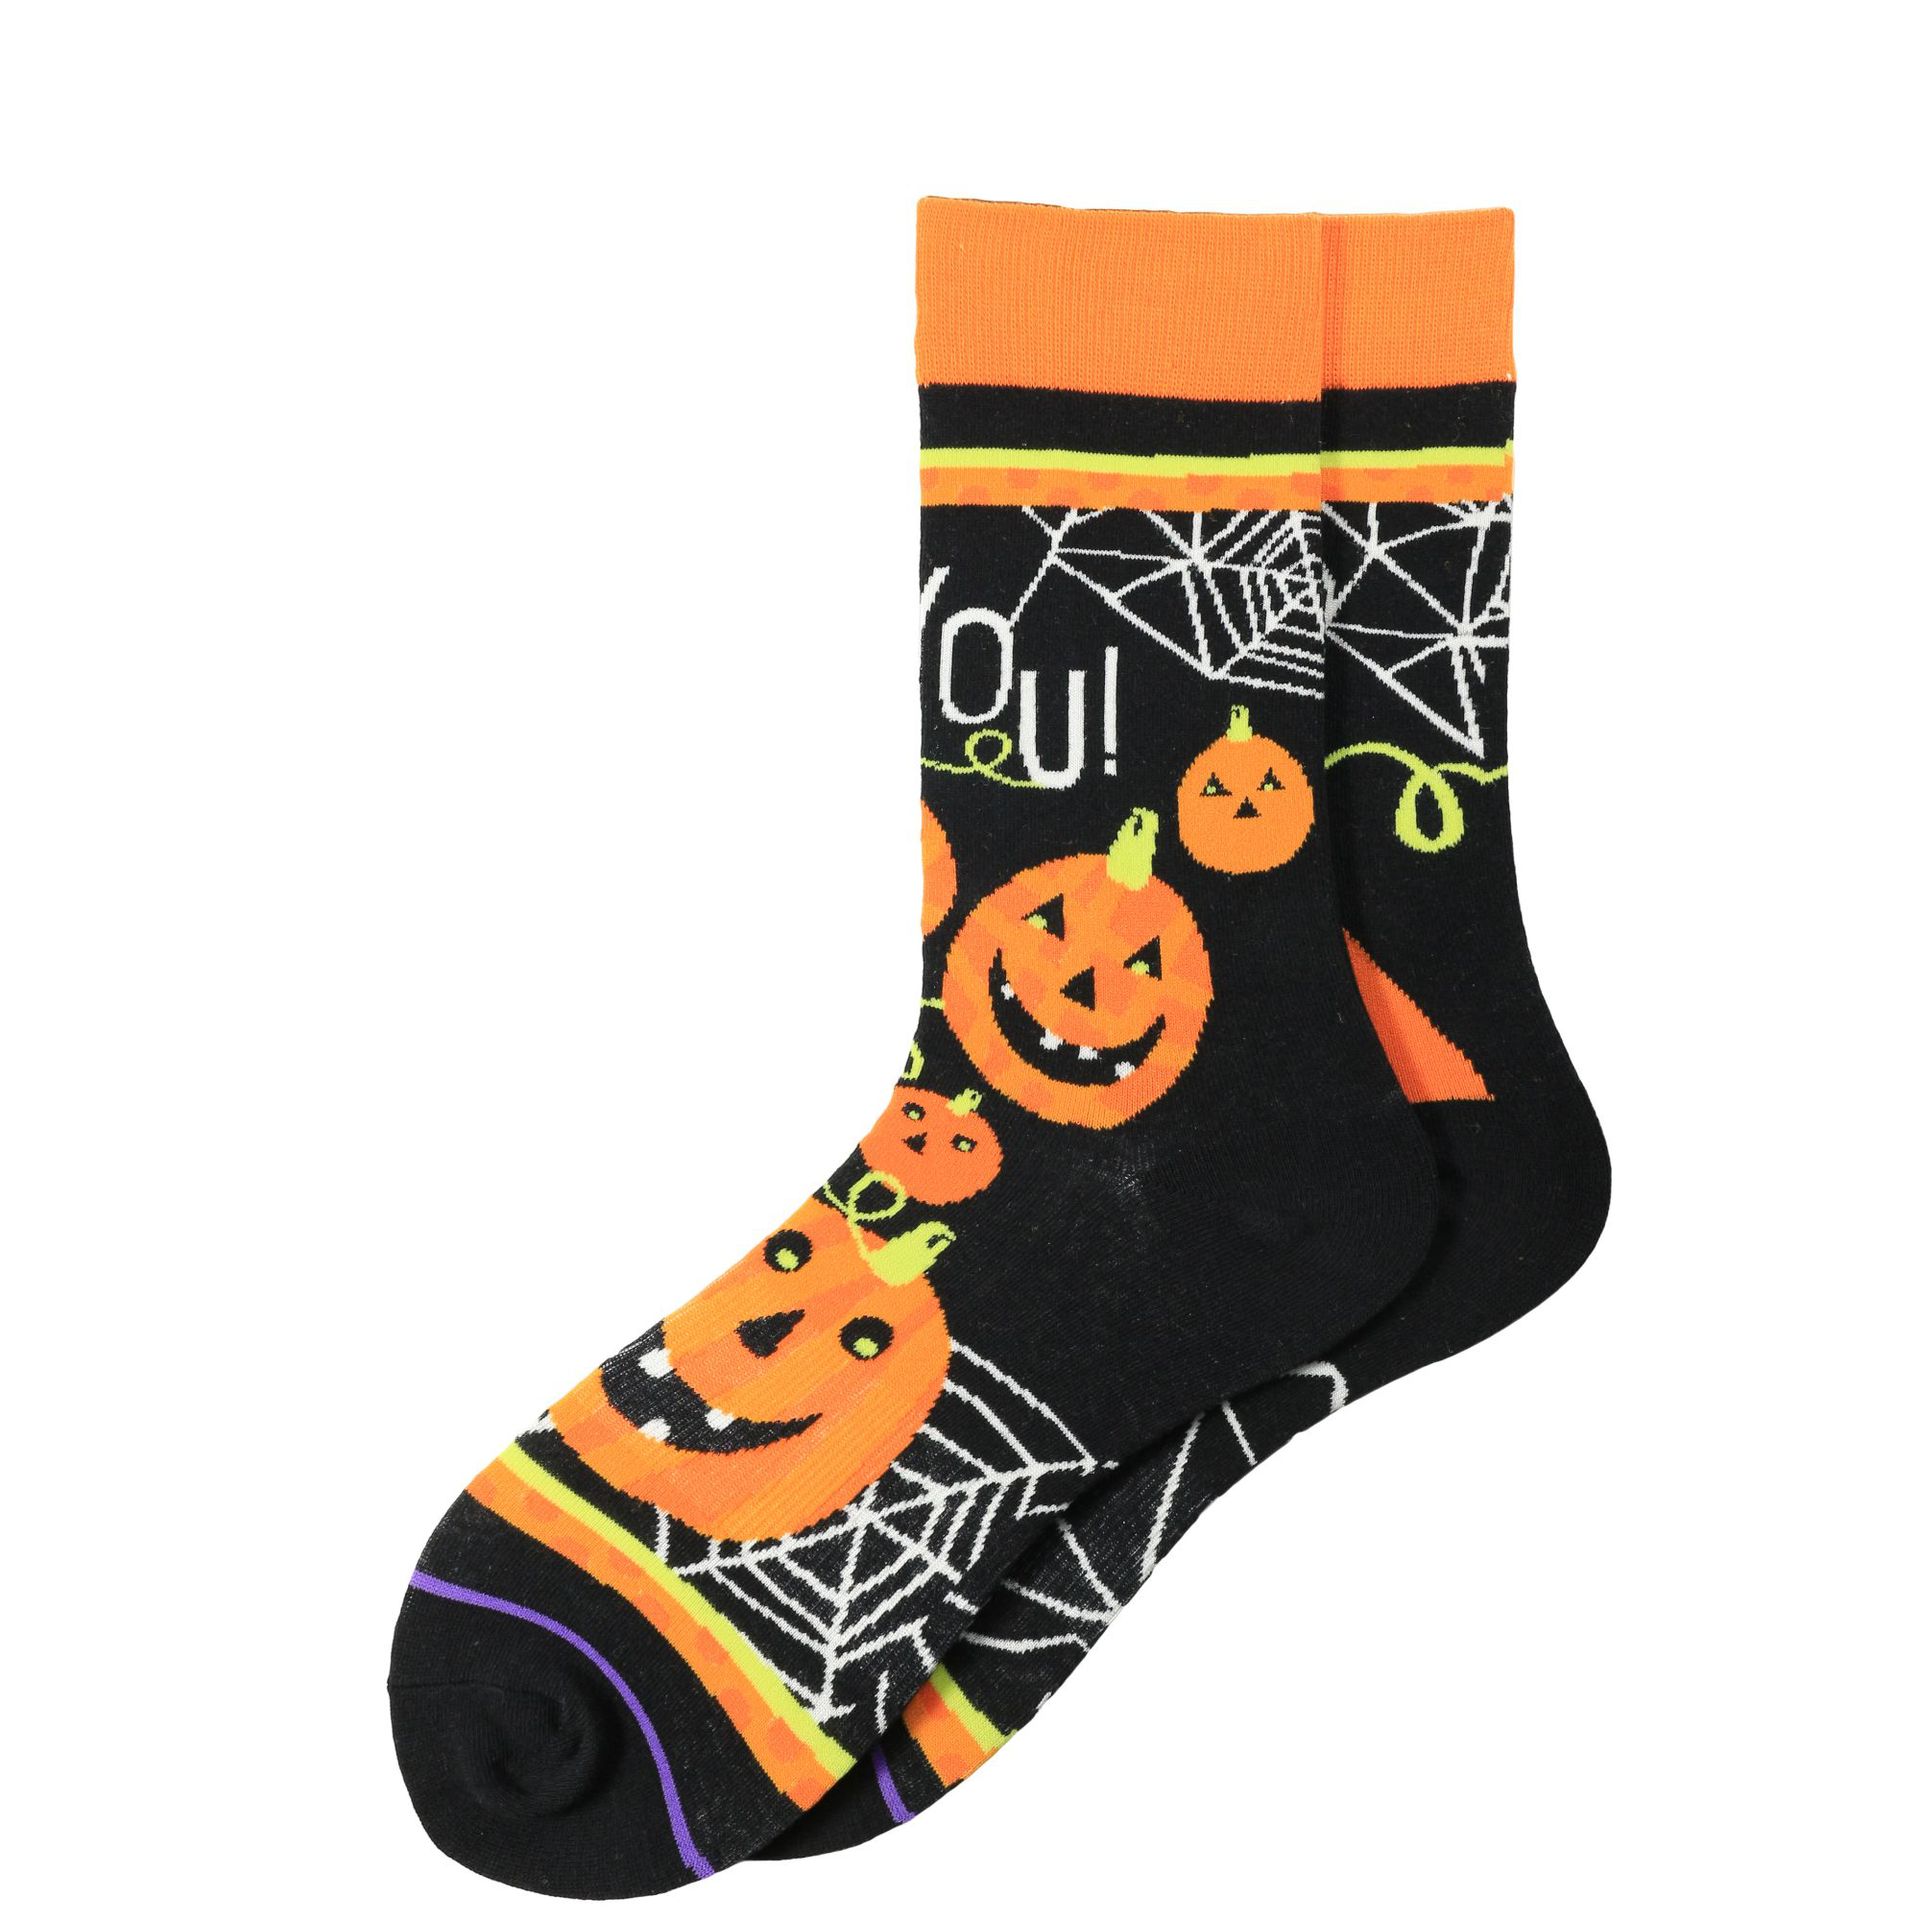 AB Male Fashion Ankle Socks Tide Colorful Cartoon Happy Halloween Socks Cotton Socks Wholesale